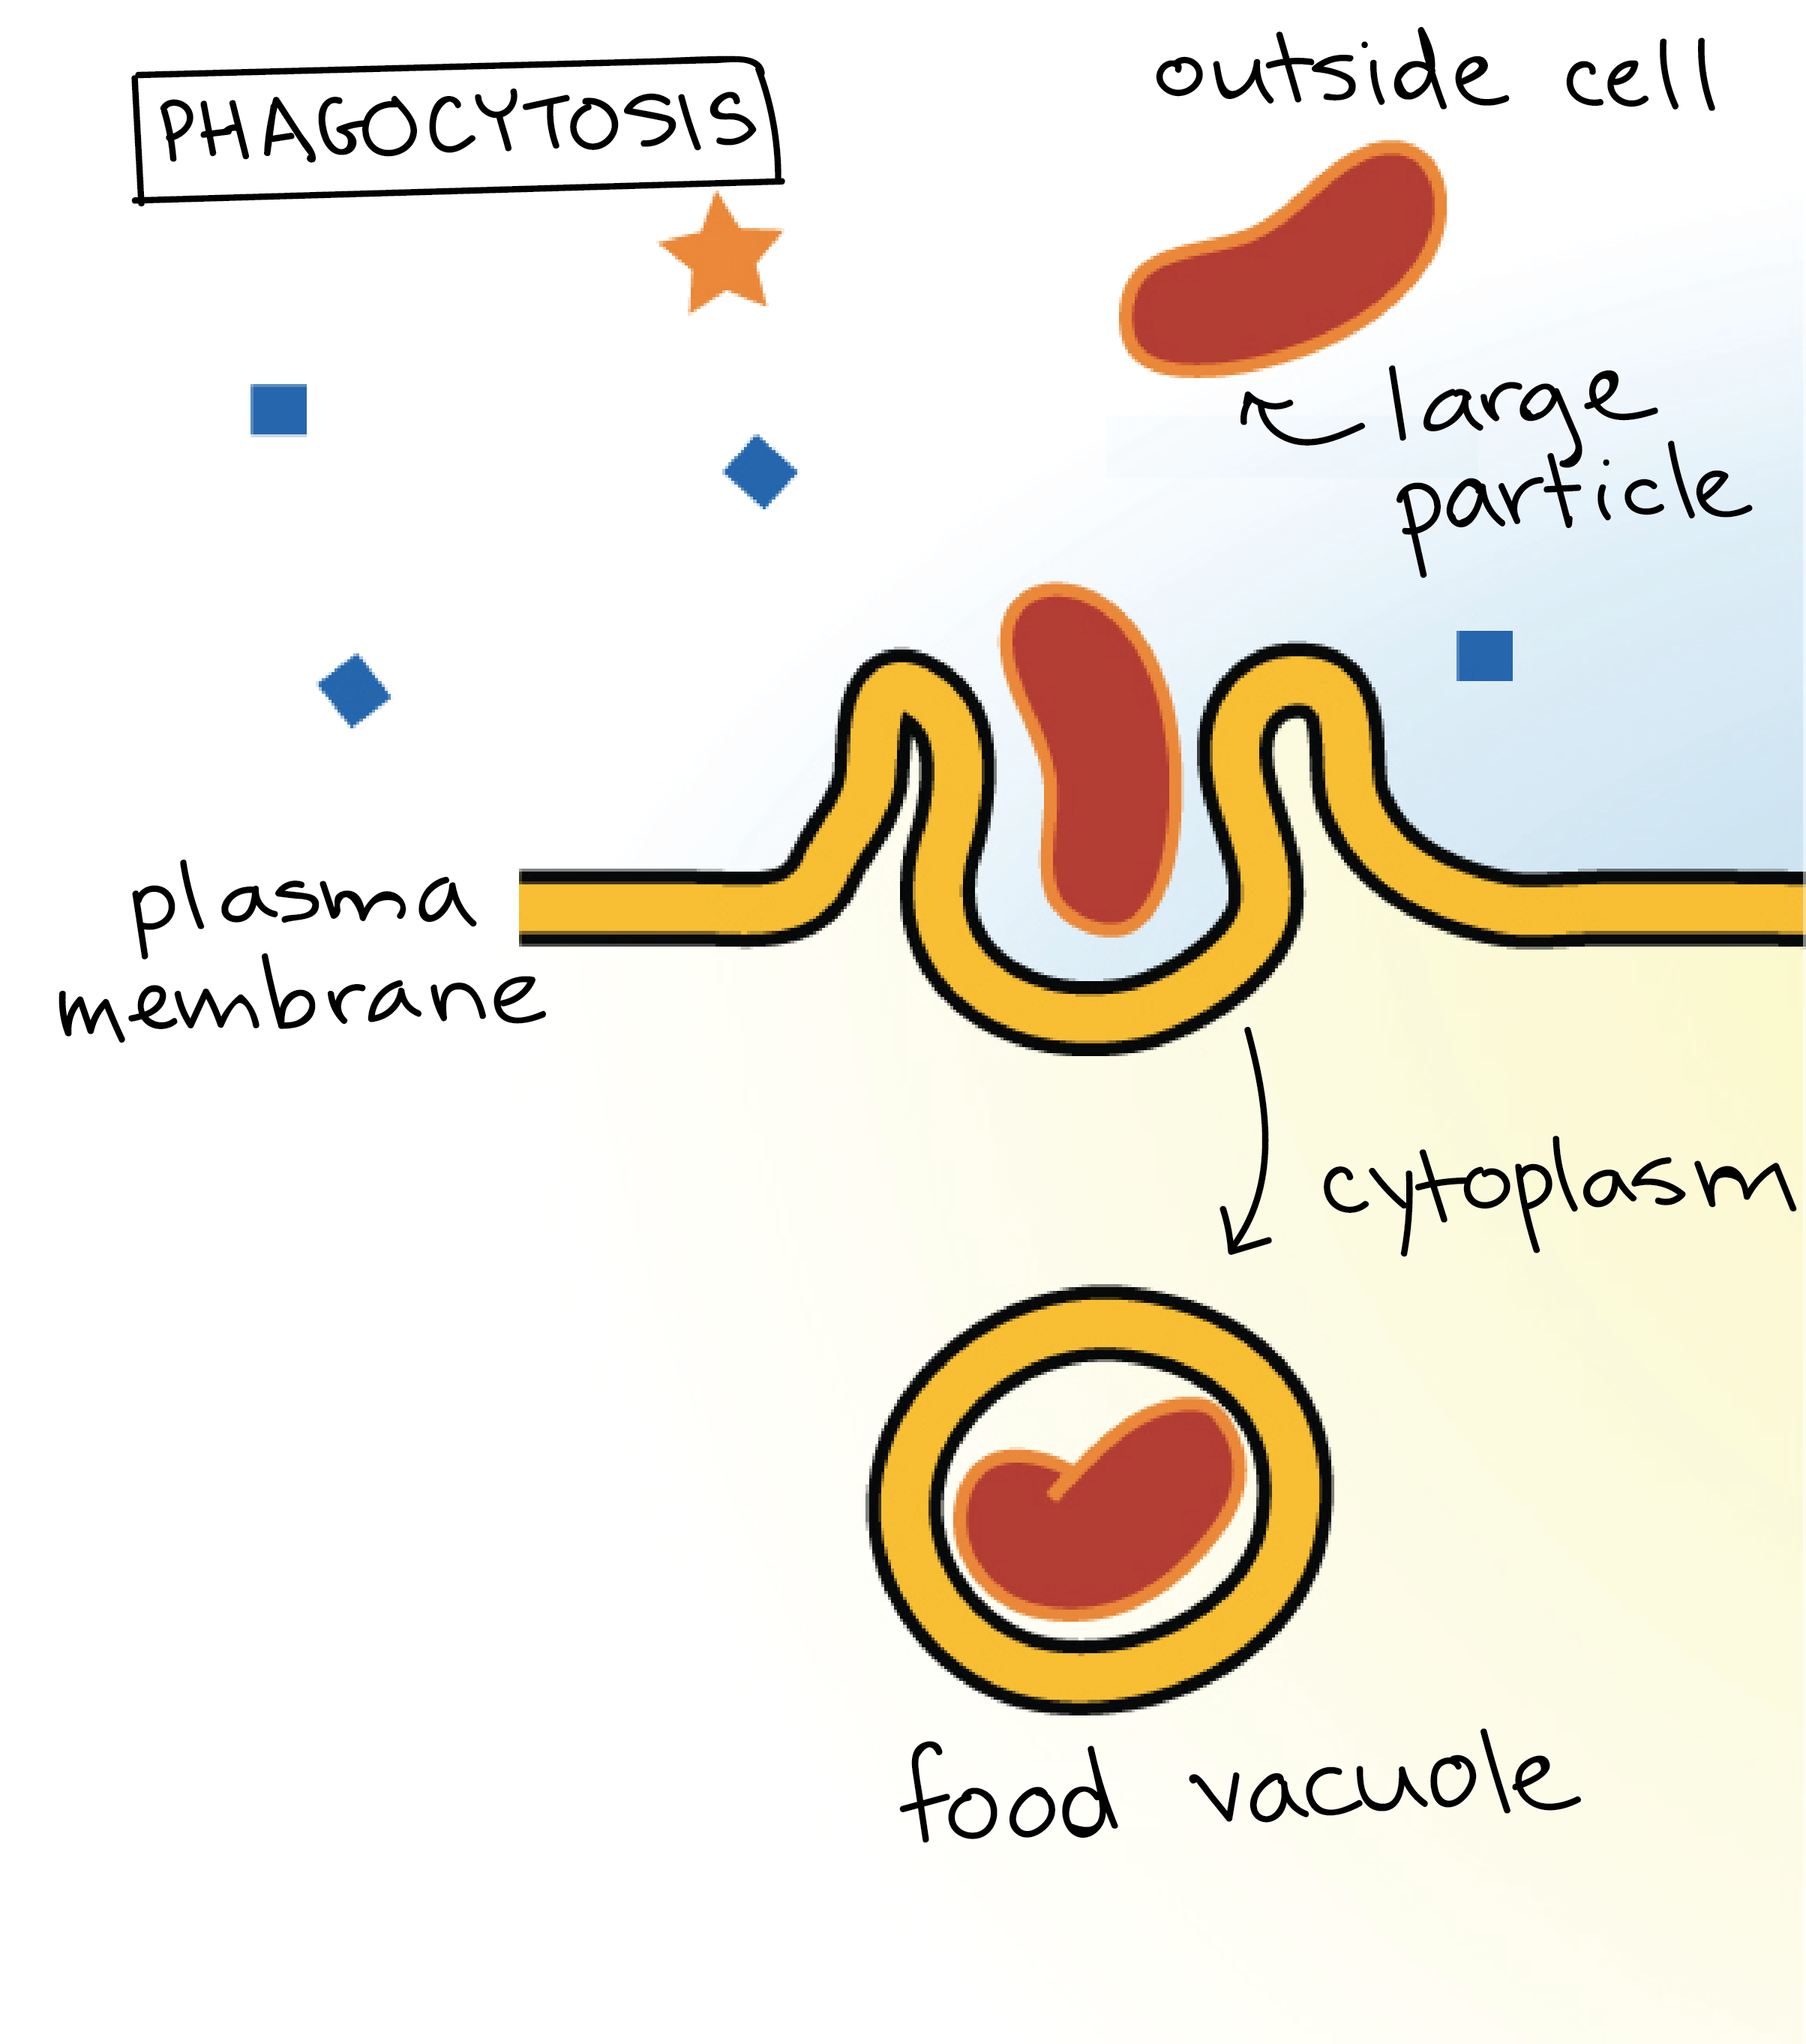 Phagocytosis process